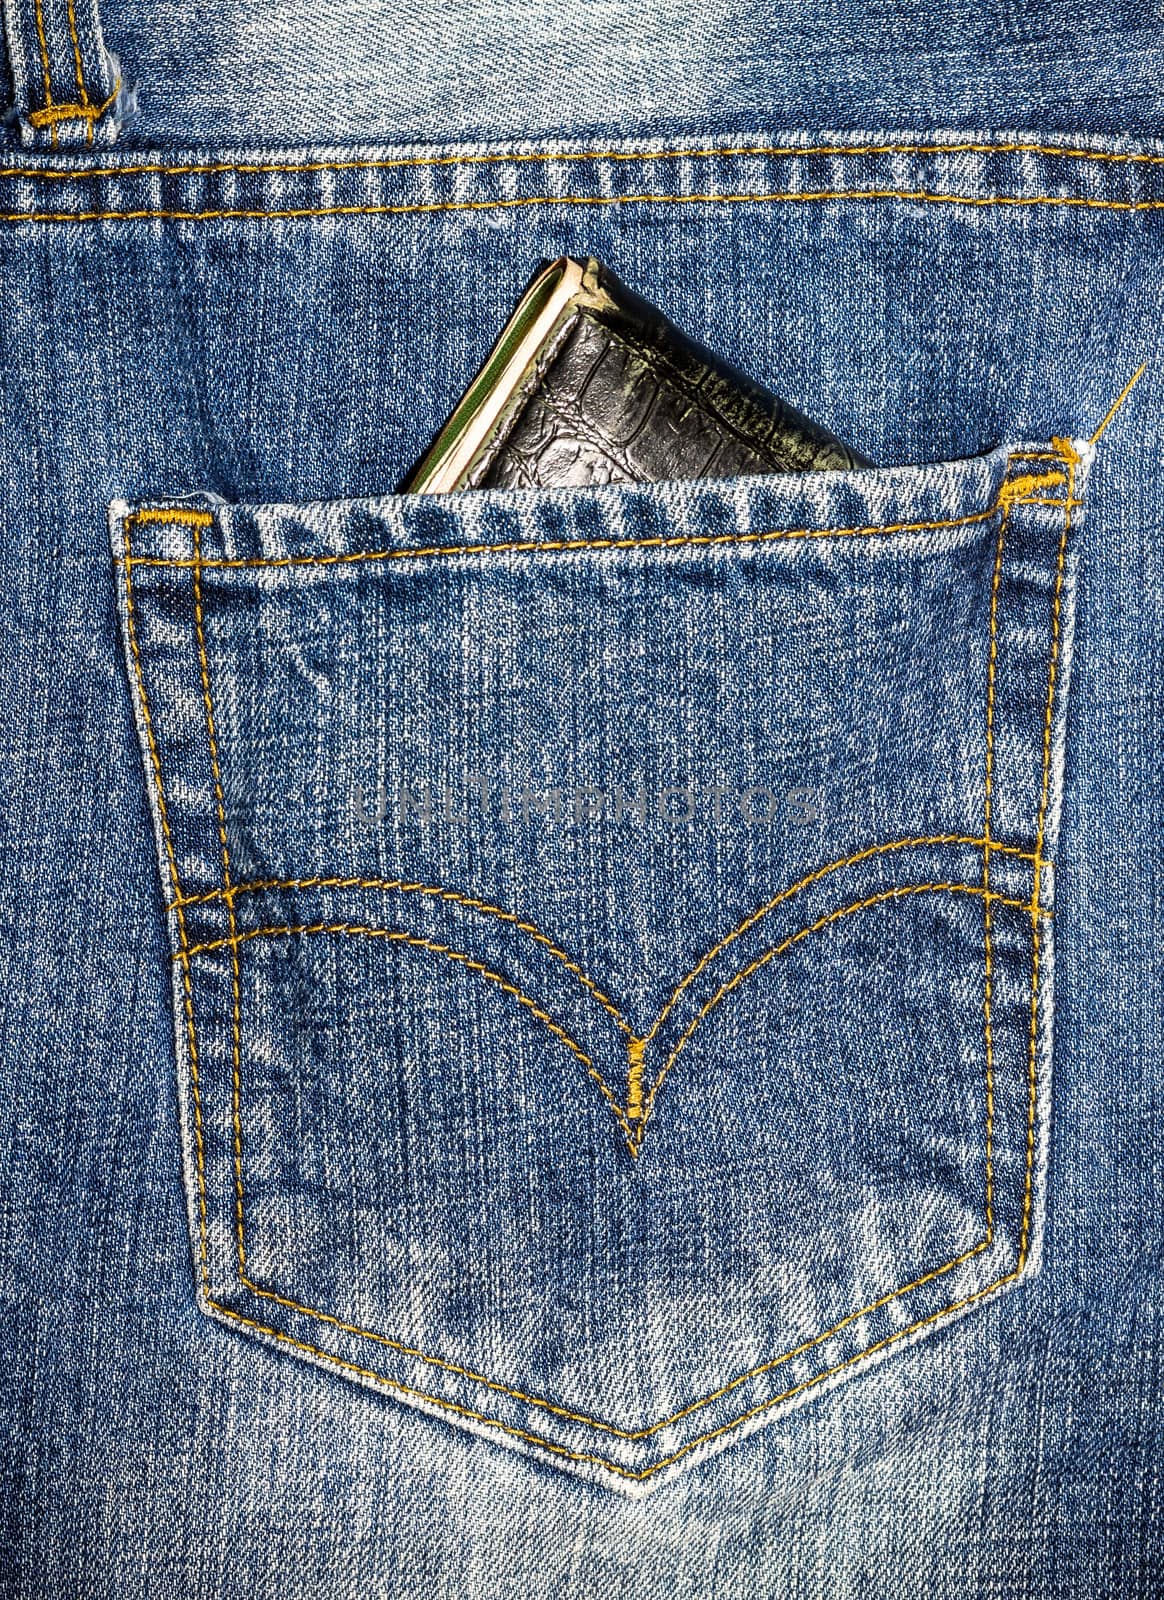 Blue jeans pocket. by seksan44